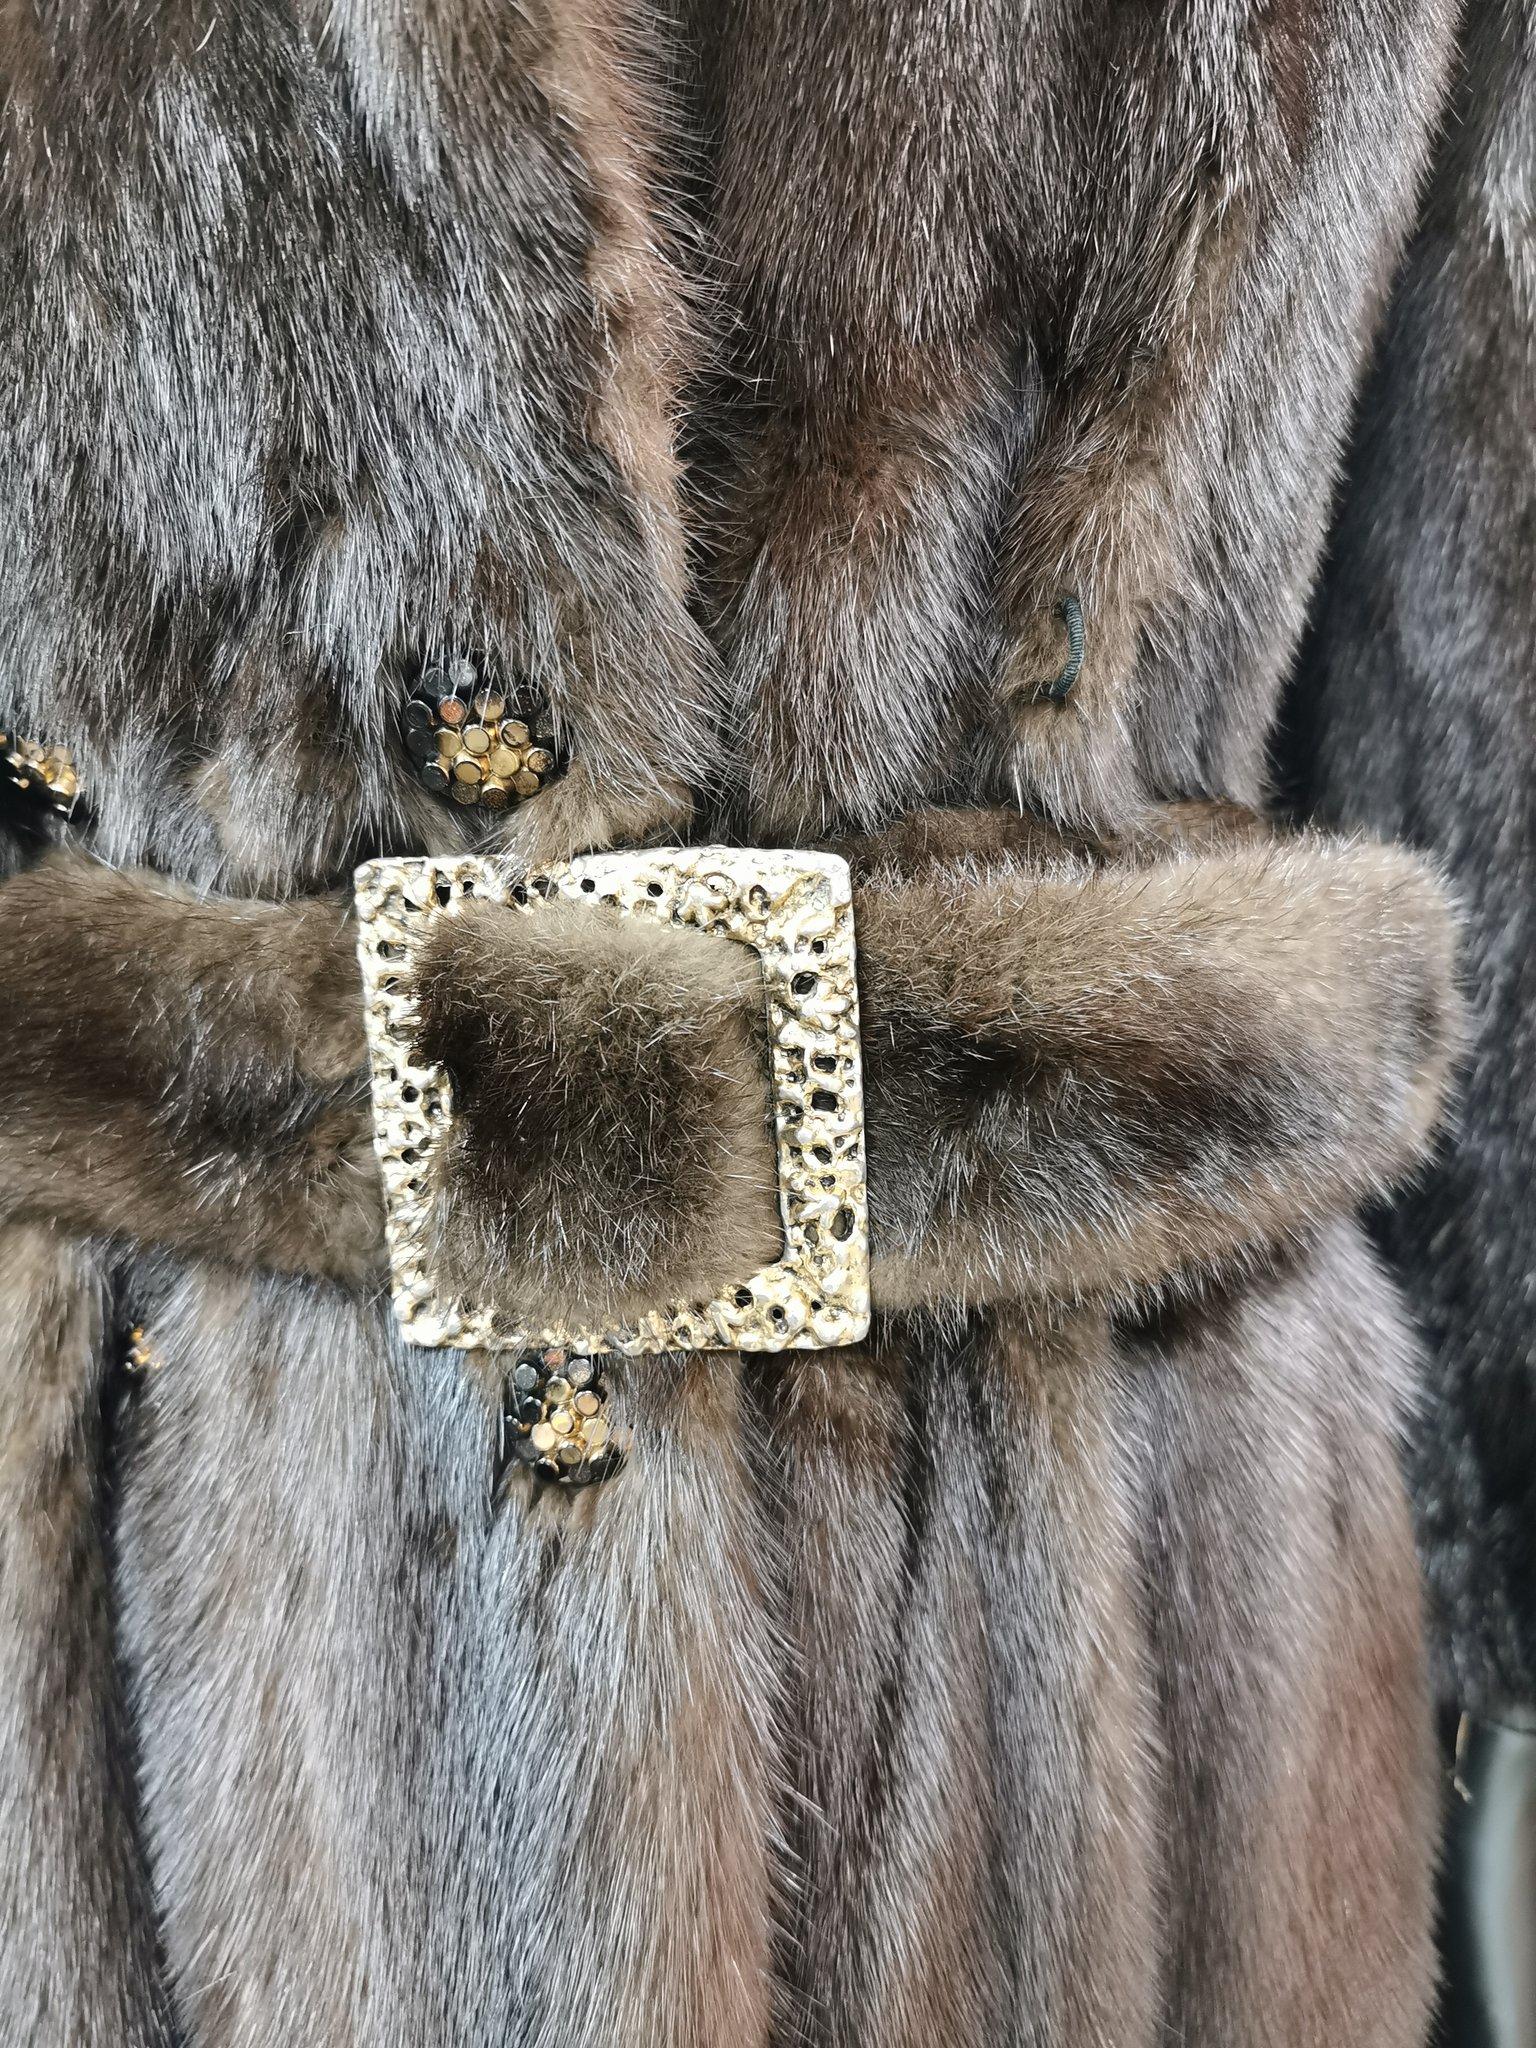 Christian dior / Holt renfrew mink fur coat size 6 In Excellent Condition For Sale In Montreal, Quebec